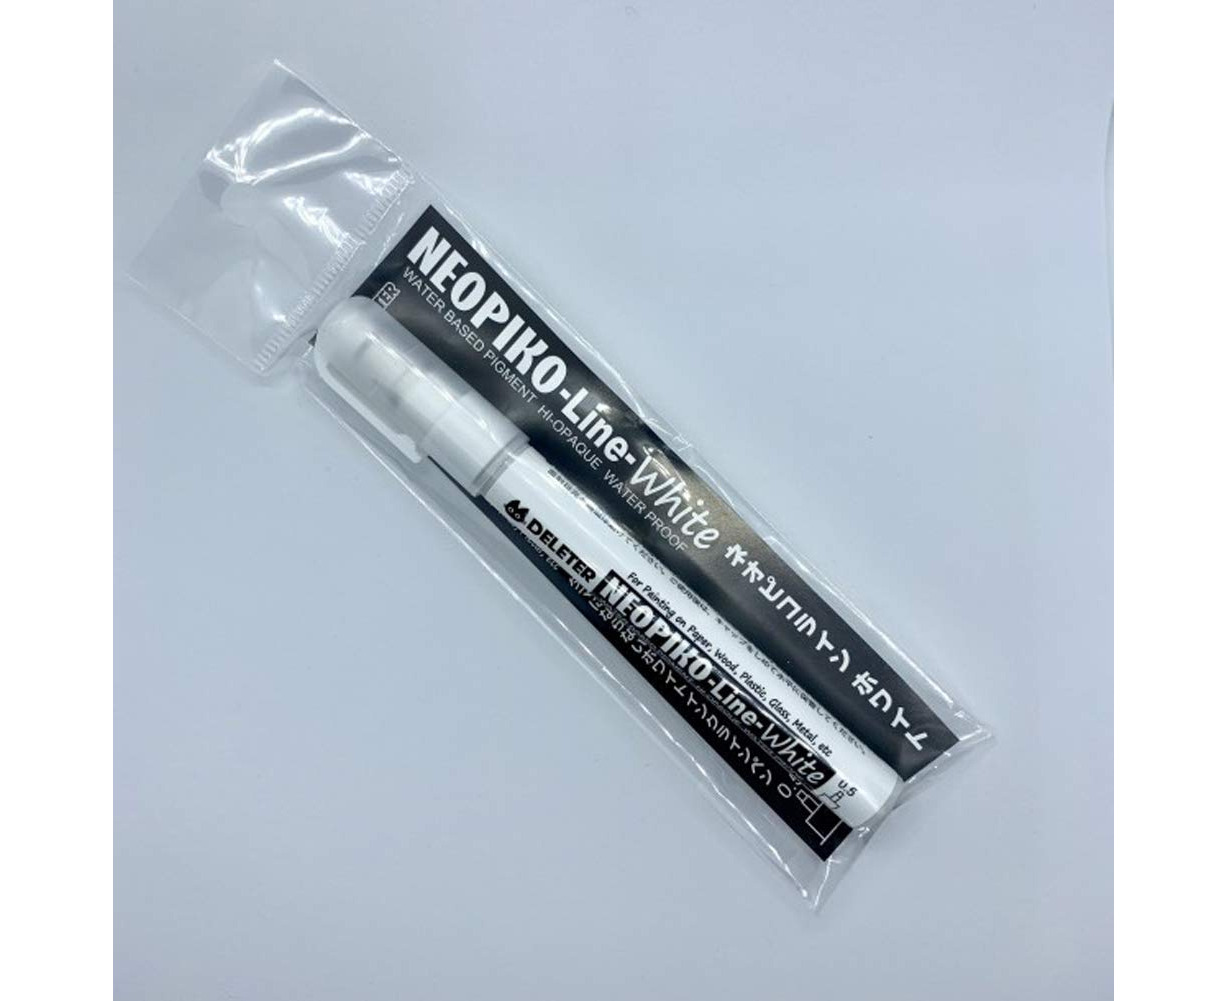 Wholesale Deleter Neopiko White Line Marker 0.5mm